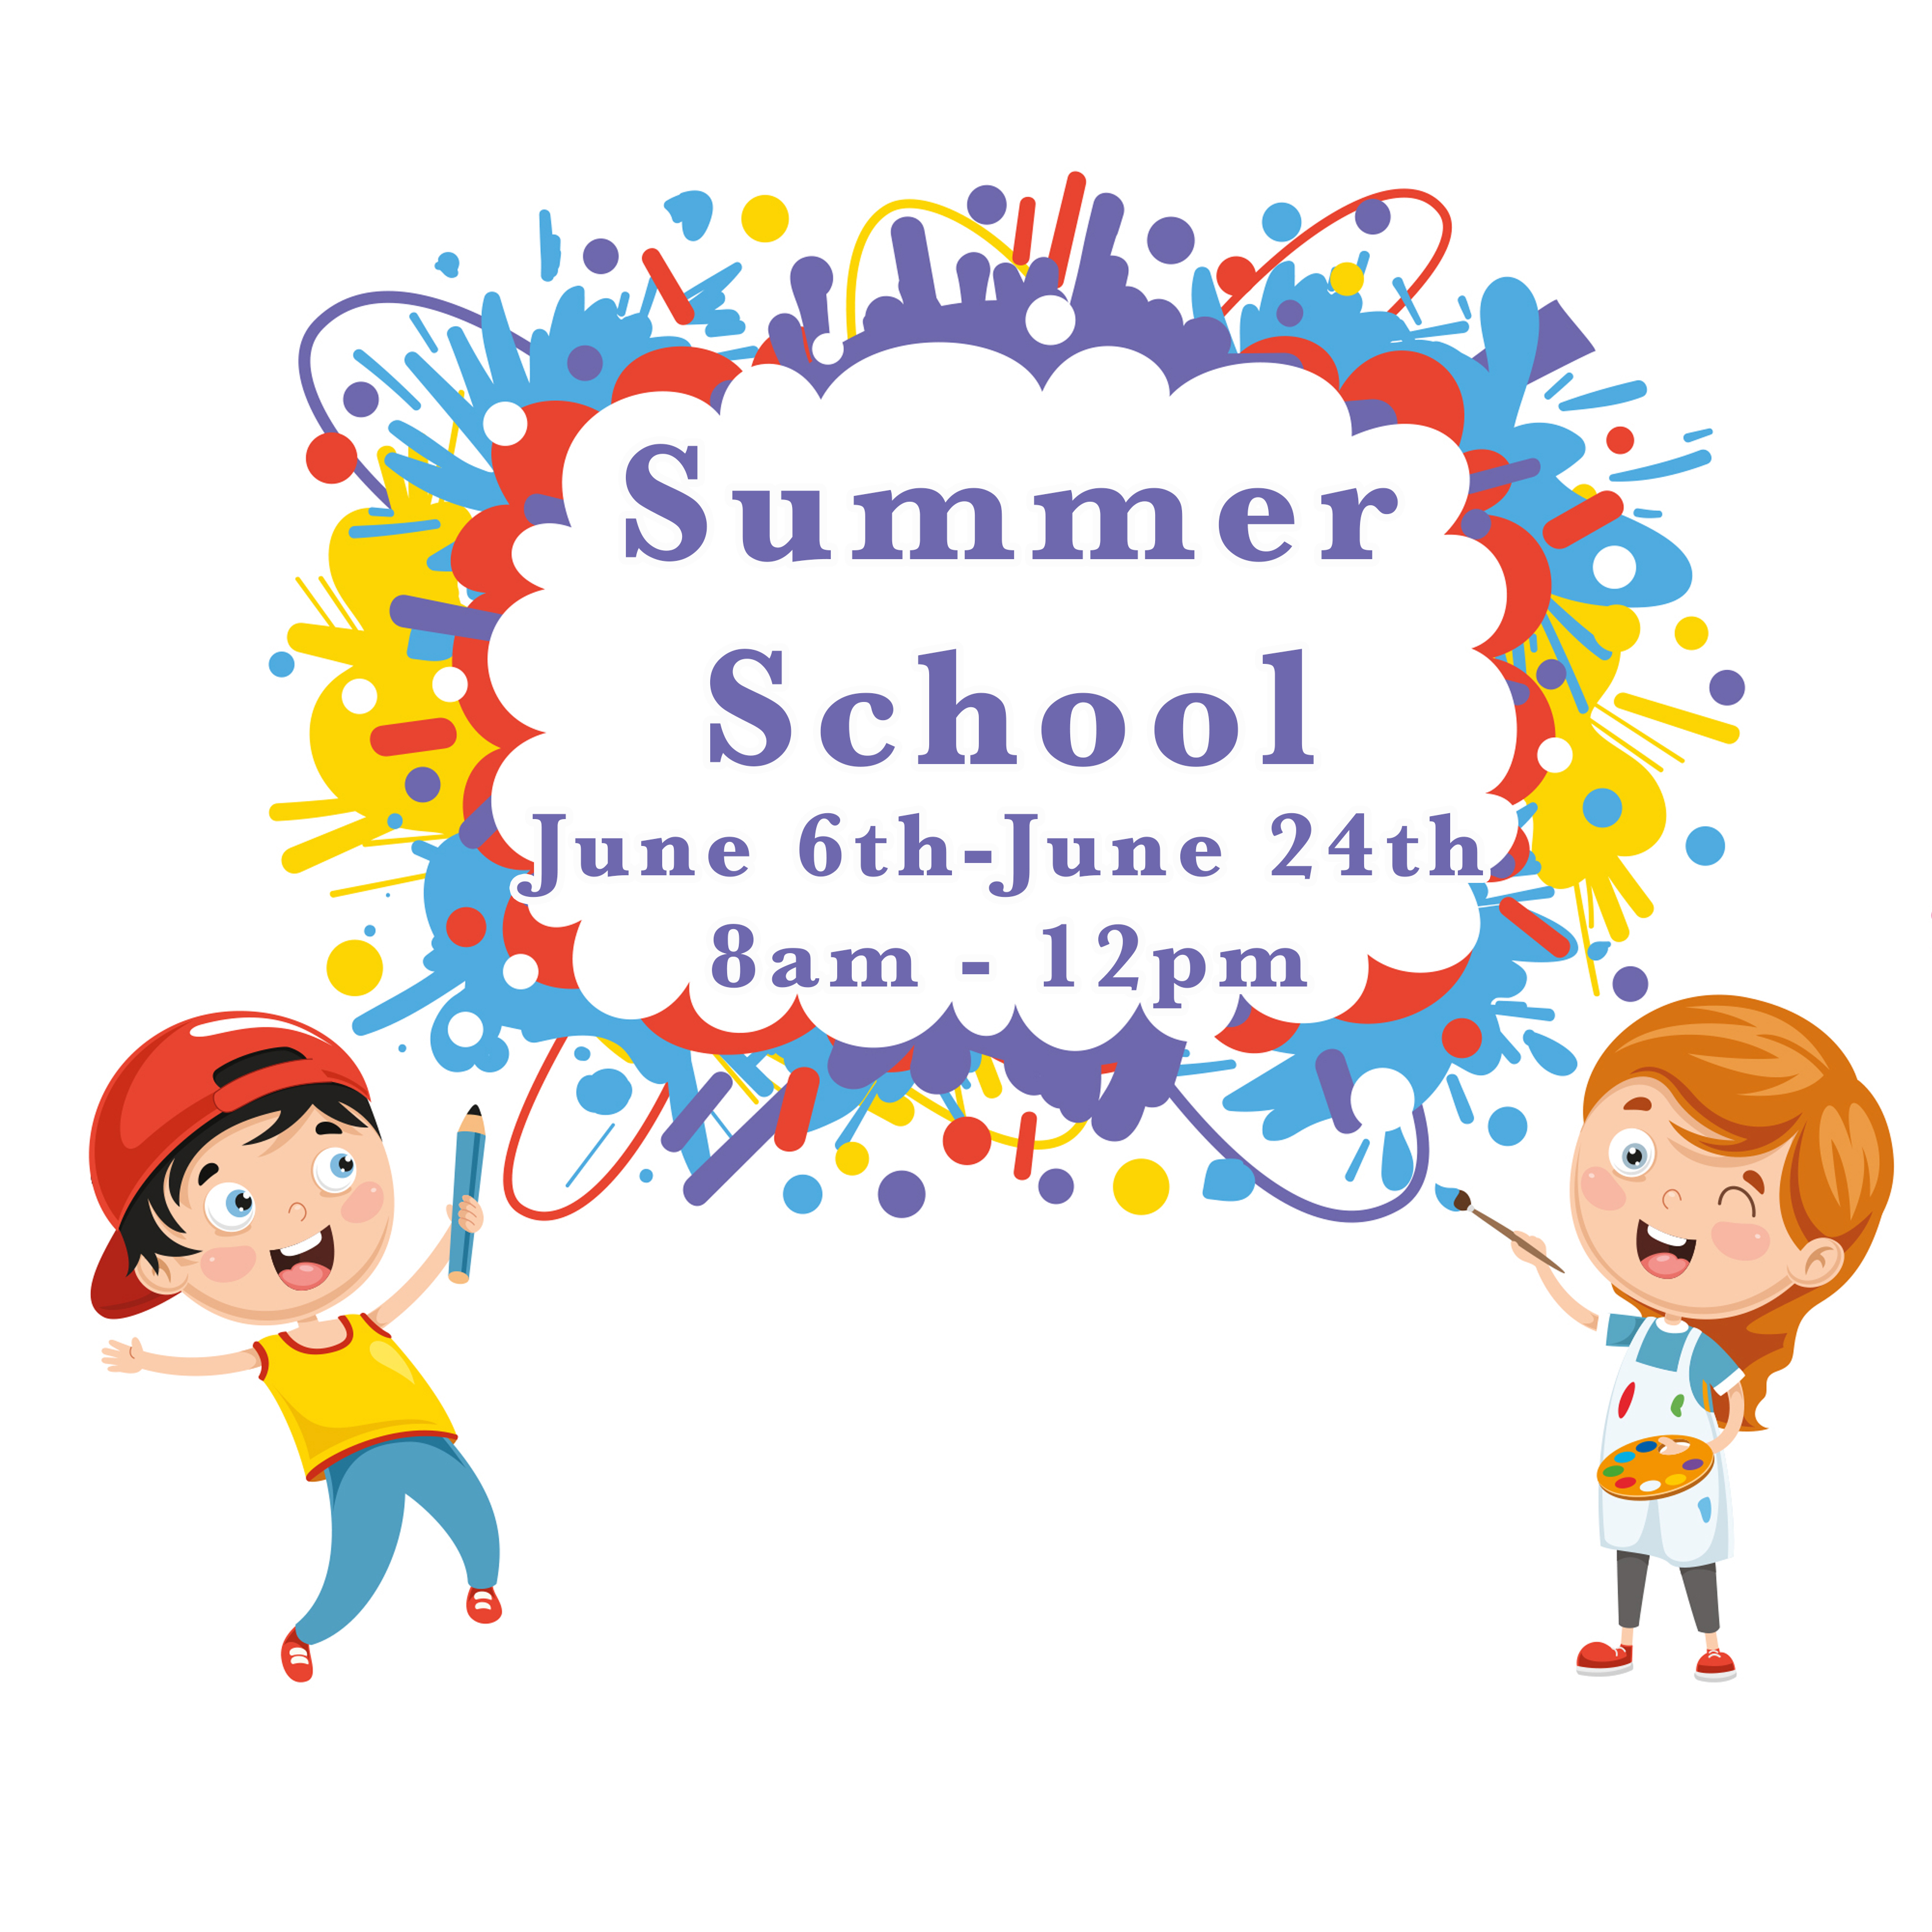 Summer School June 6th-24th 8am-12pm